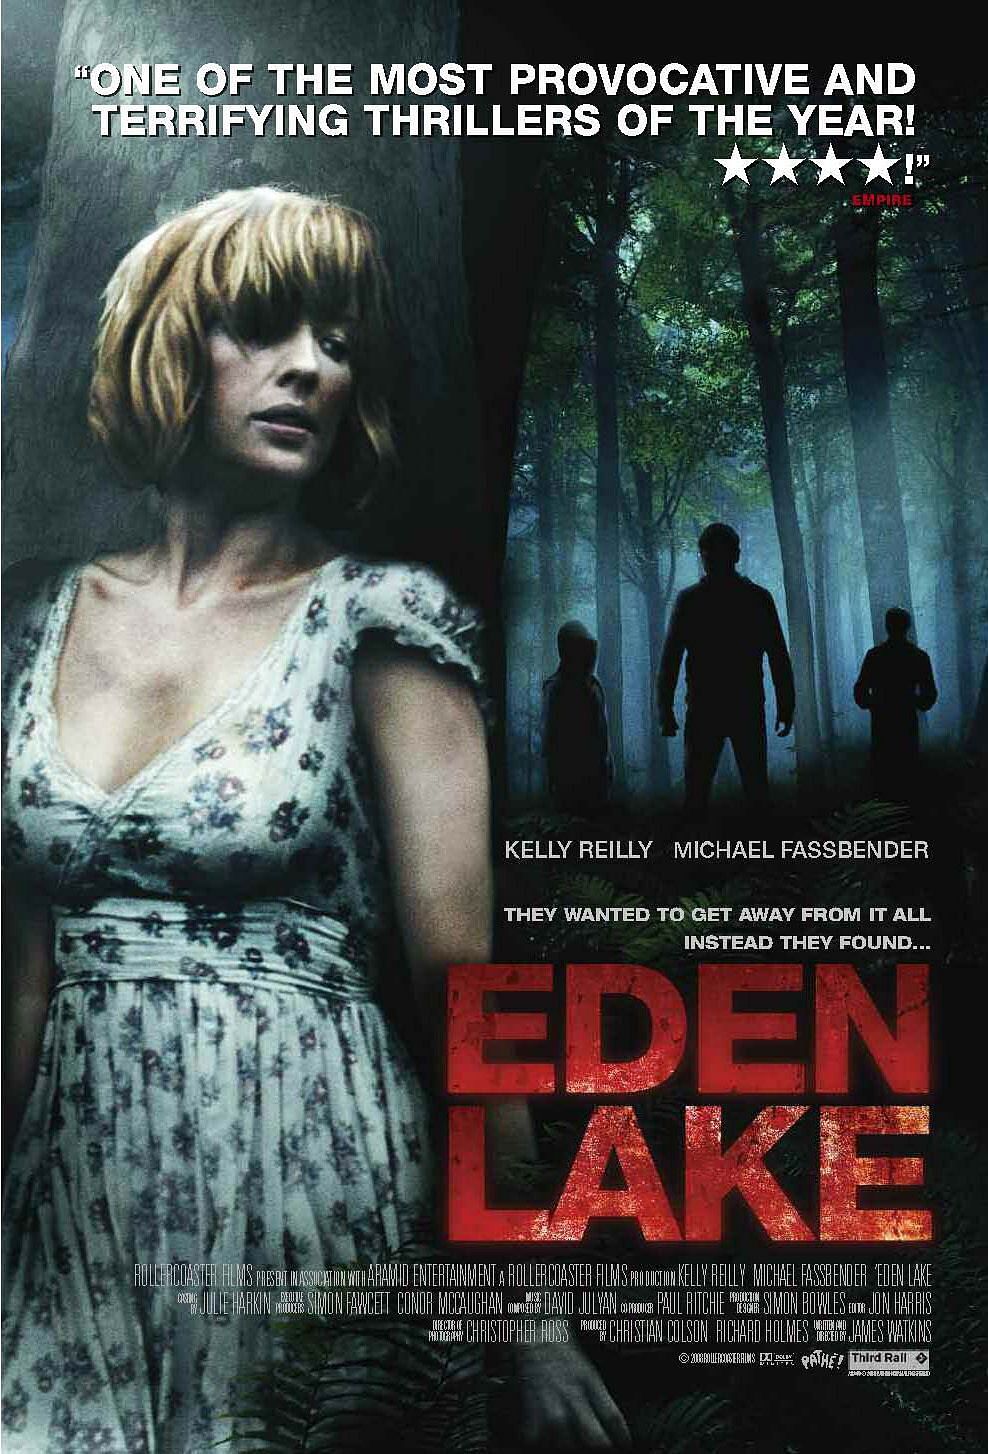 Eden Lake image (image via IMDB.com)